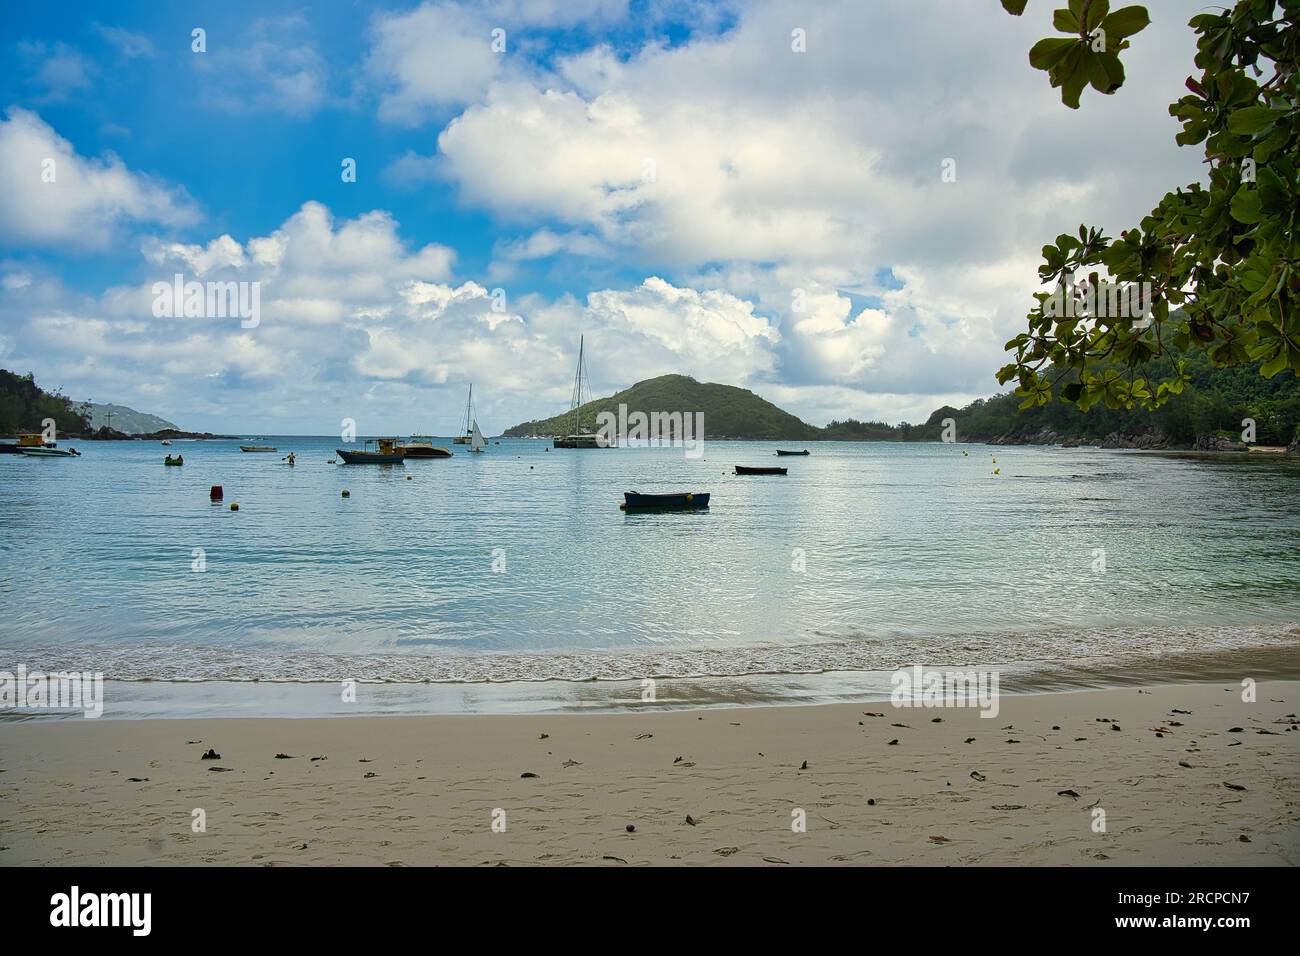 Anlegeboot, Yachten am Port launay Beach, weißer Sandstrand, Mahe Seychellen. Stockfoto